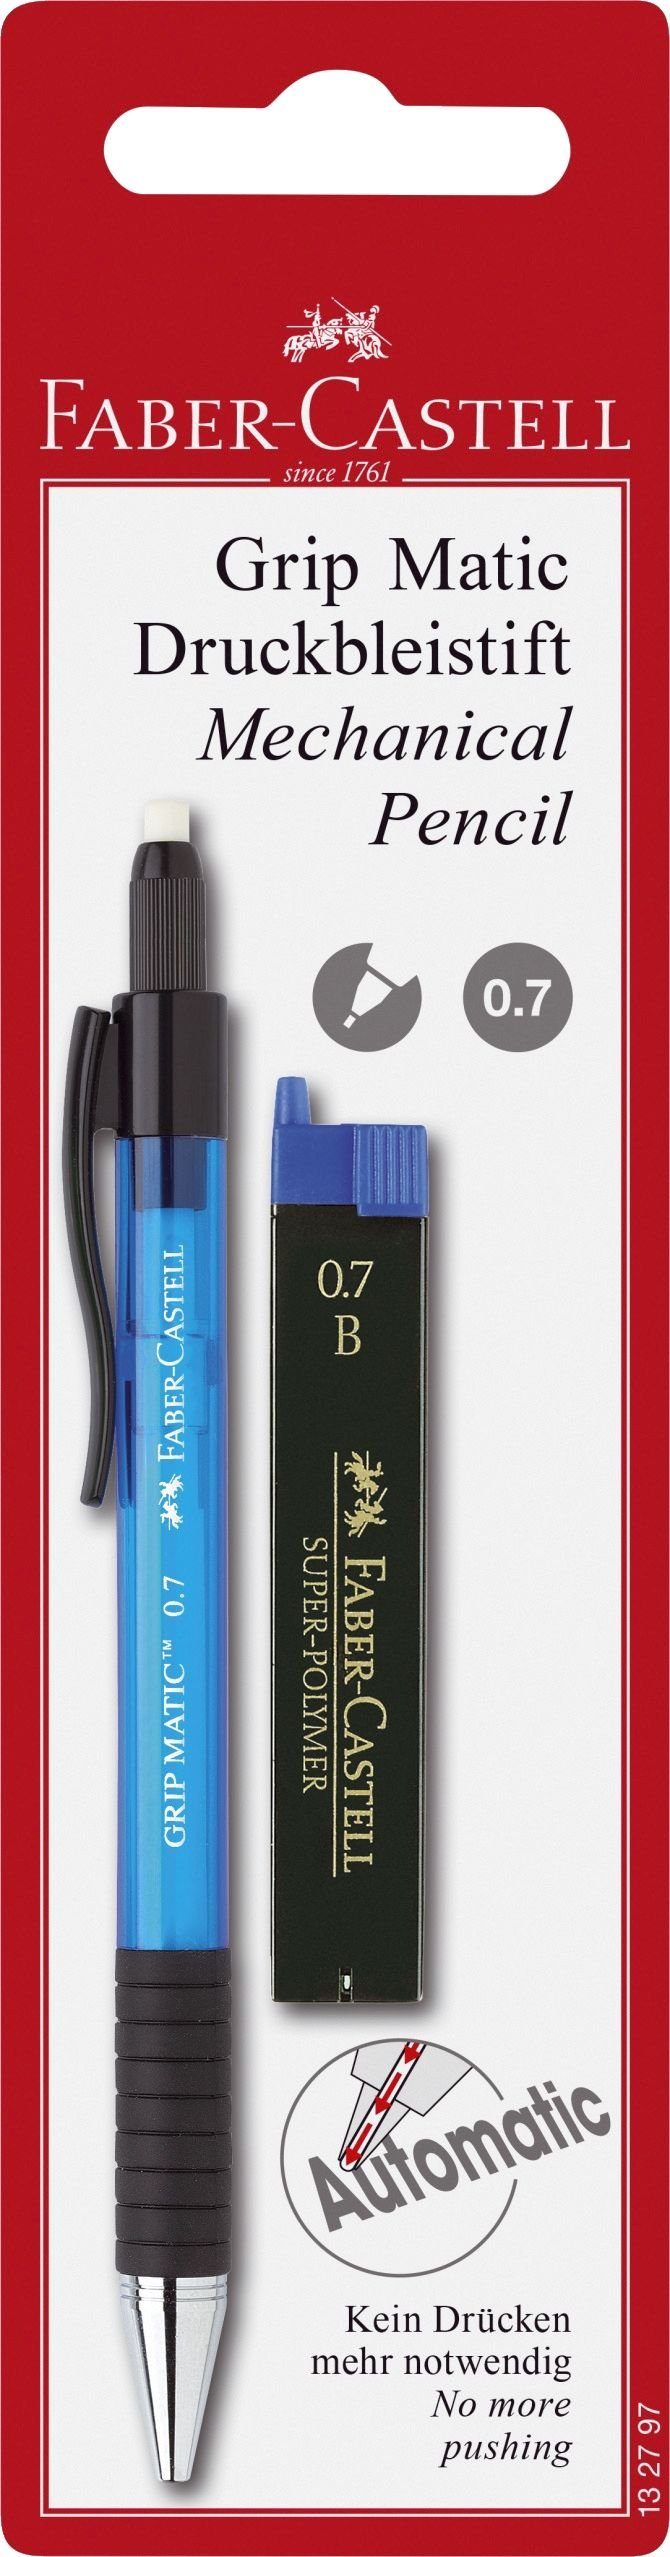 Faber-Castell Stiftmine 12 blau, B, 0,7 Blisterk Feinminen GRIP-MATIC auf Druckbleistift - mm